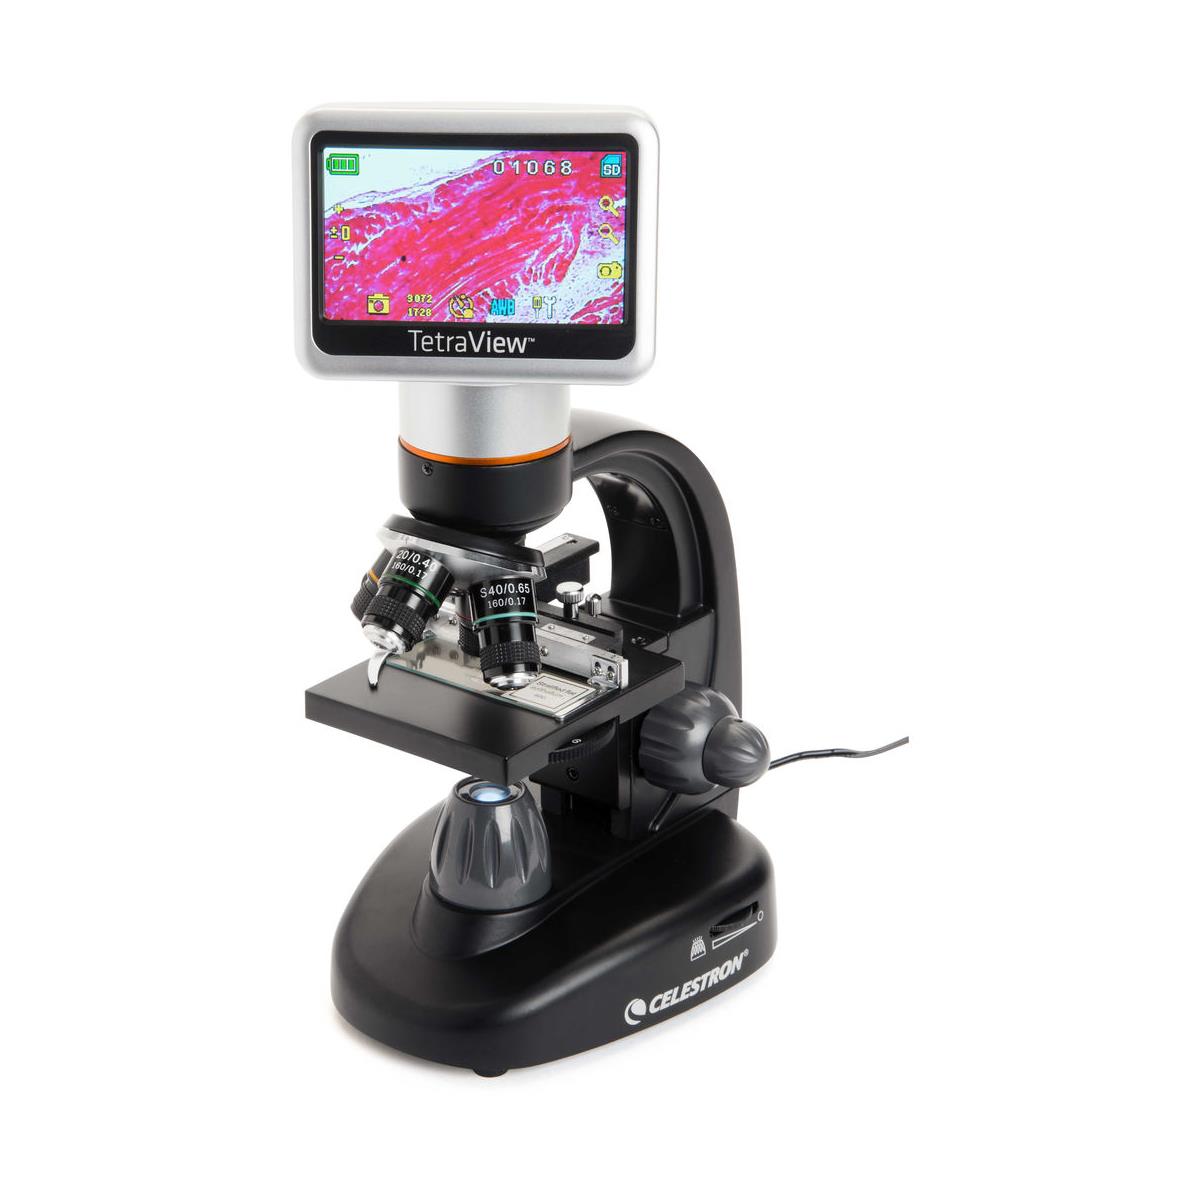 Image of Celestron Tetraview LCD Digital Microscope